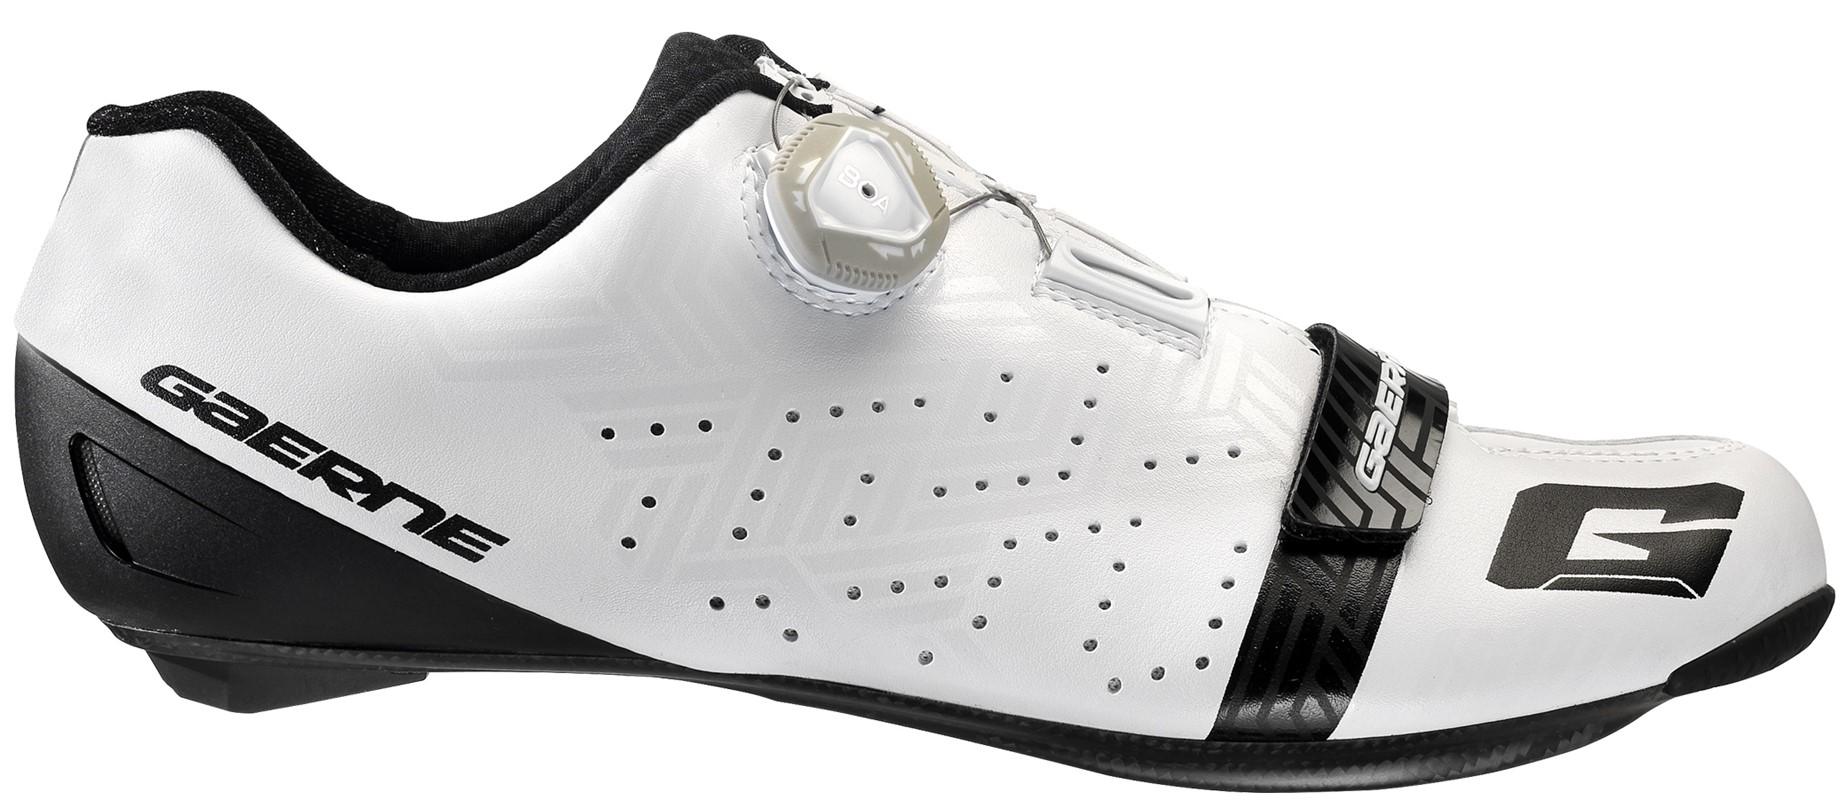 Gaerne Volata Carbon Road Shoes - White